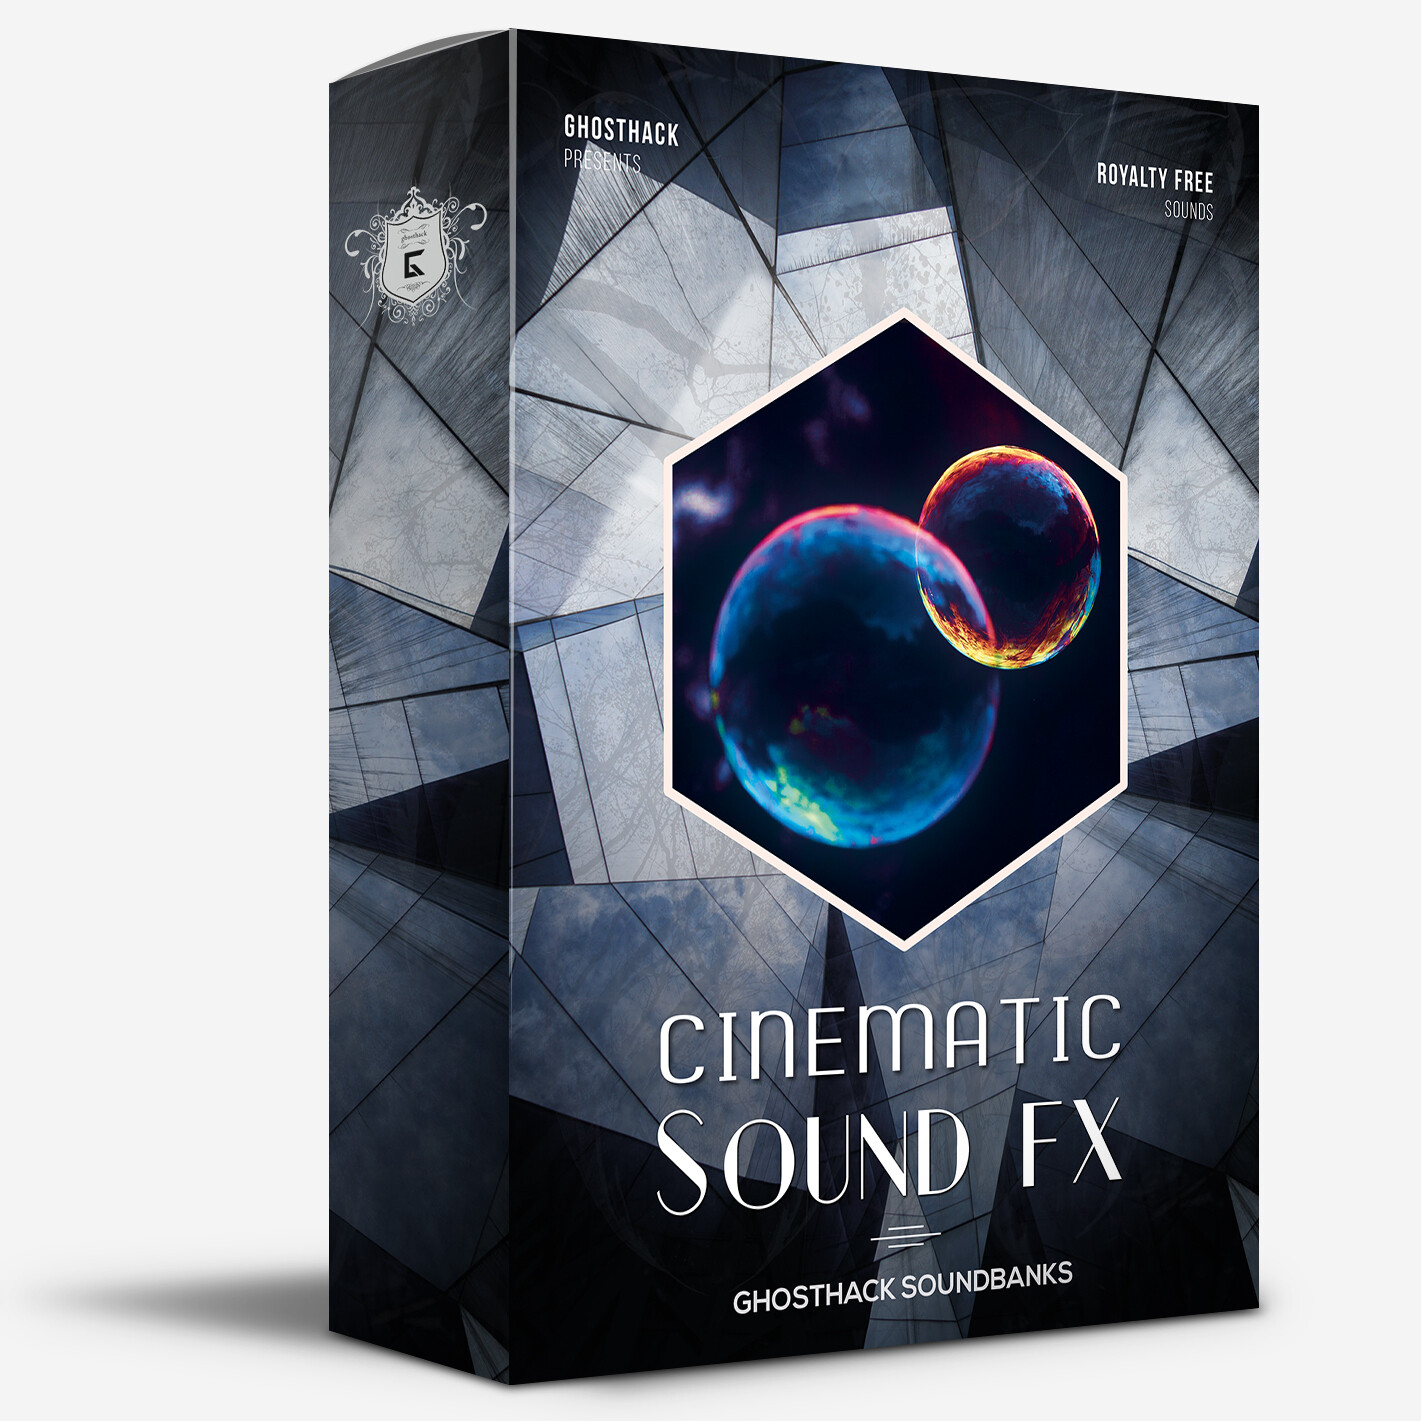 Fl studio sfx pack free download